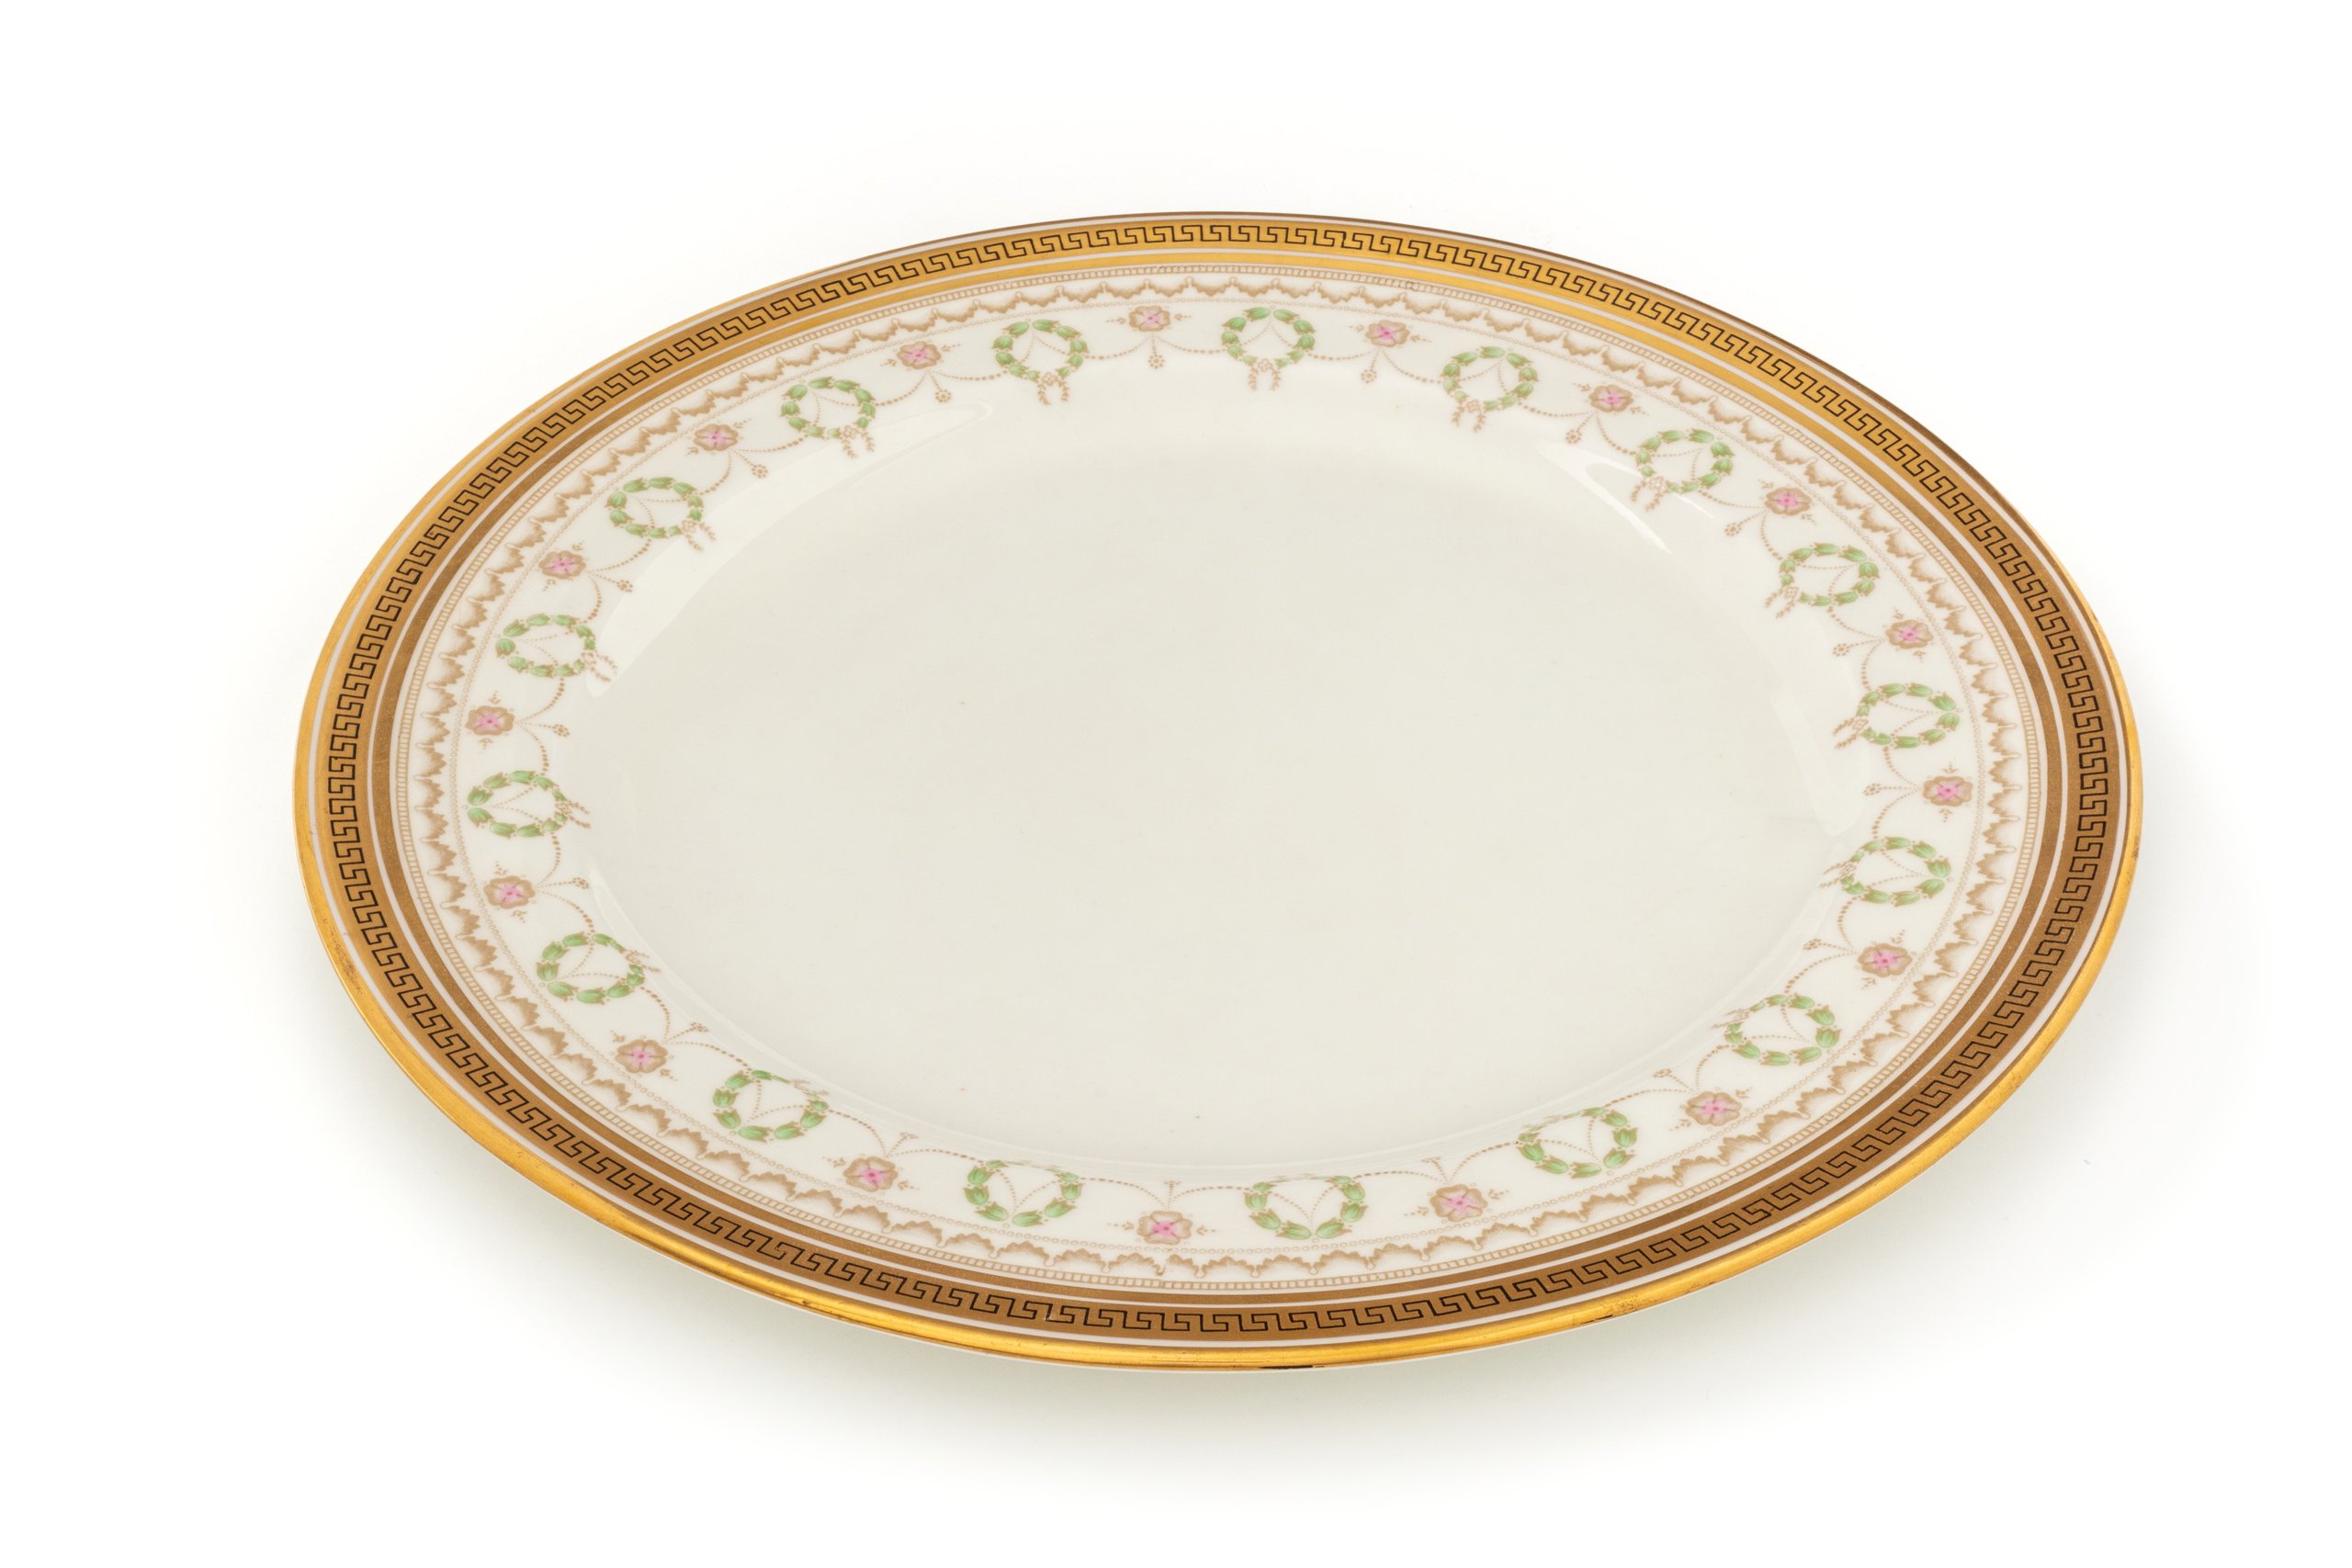 Porcelain plate by Cauldon Ltd